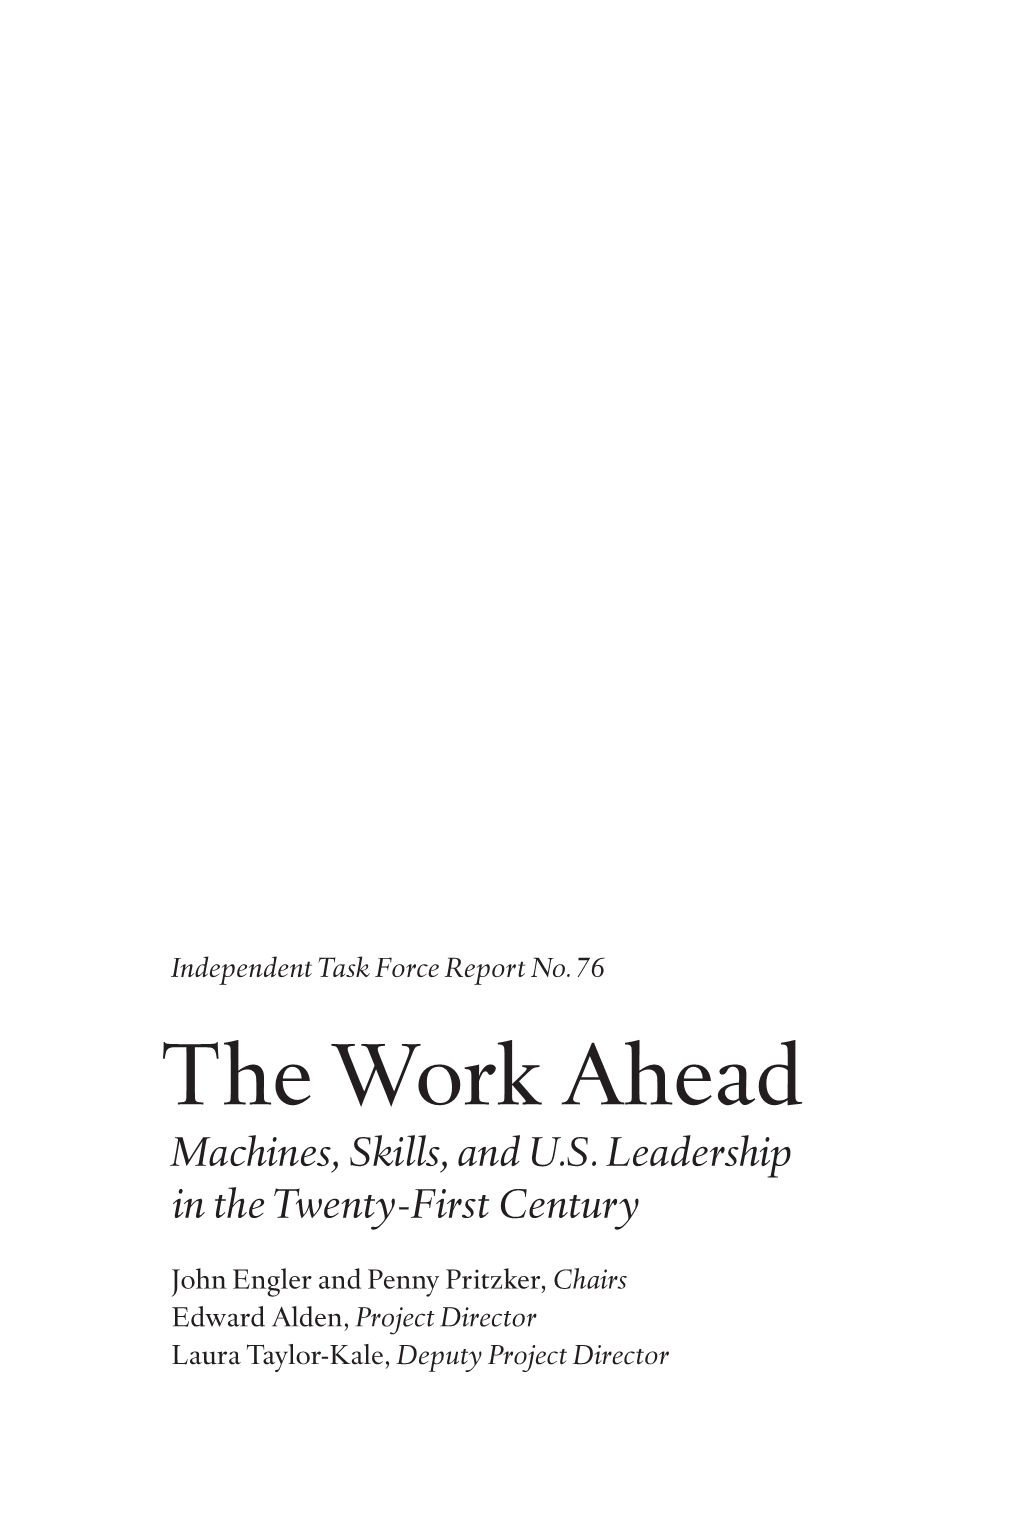 The Work Ahead Machines, Skills, and U.S